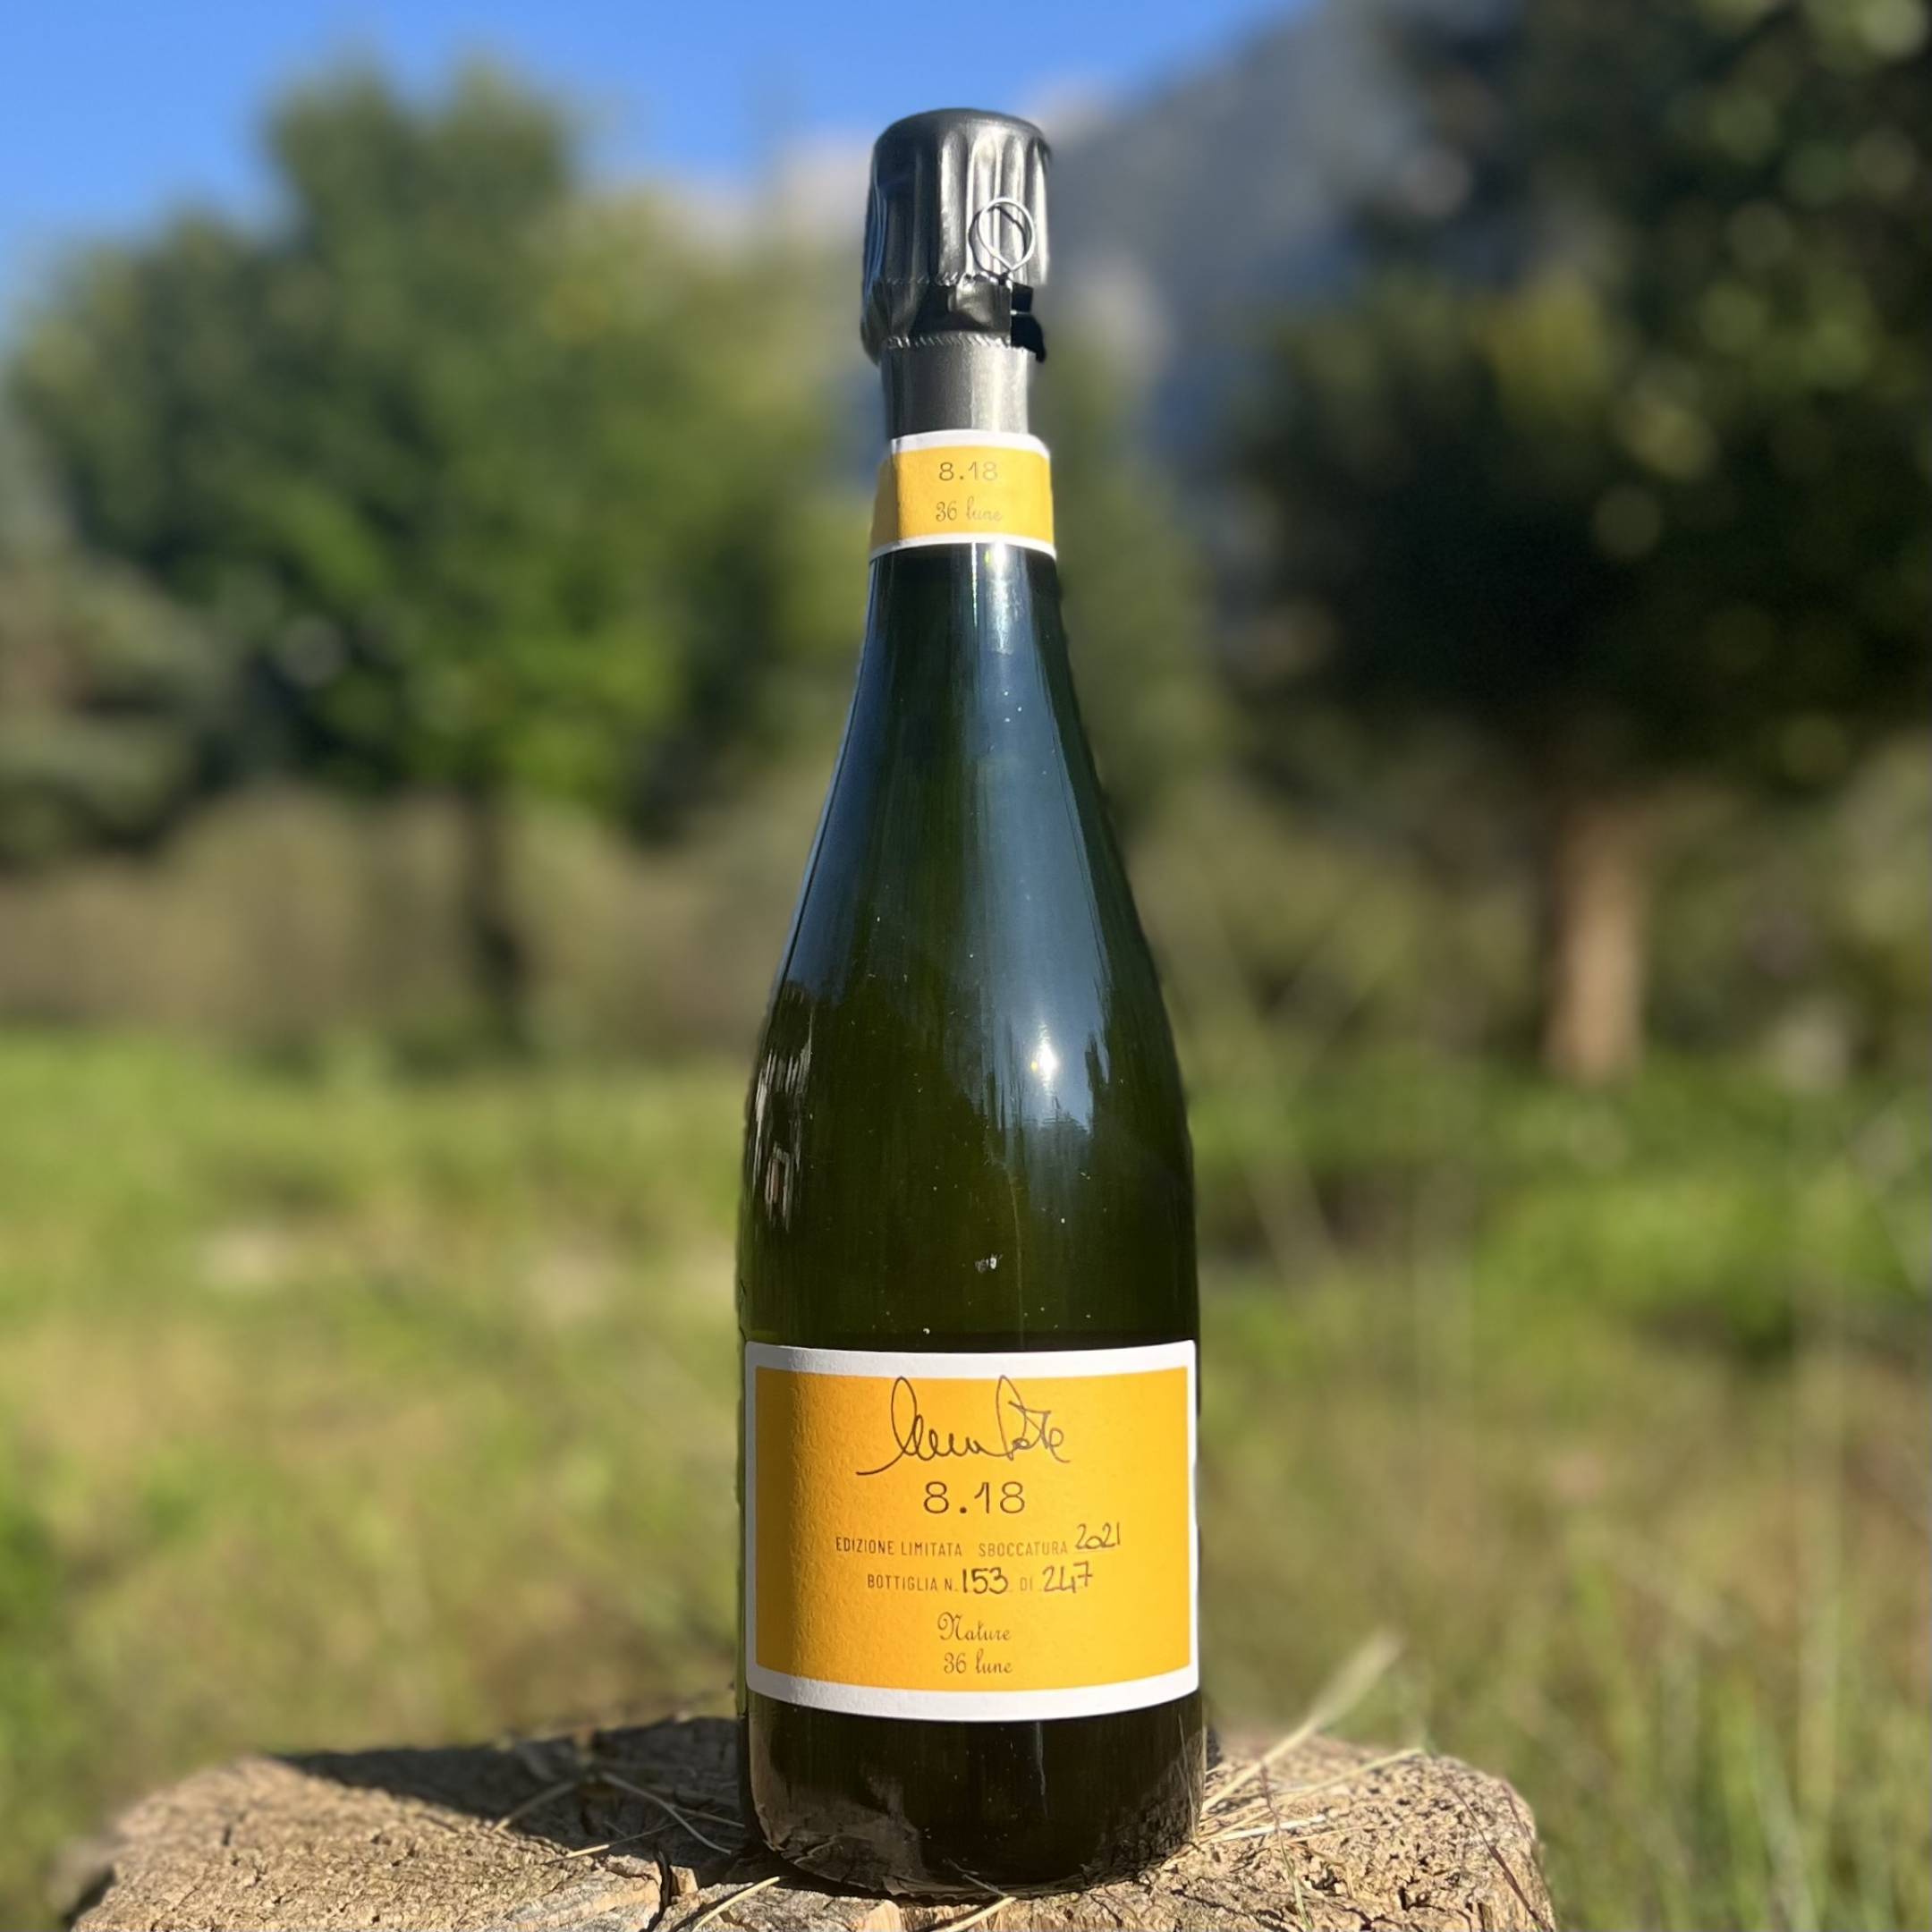 Nicola Gatta 8.18 Chardonnay Perpetuel